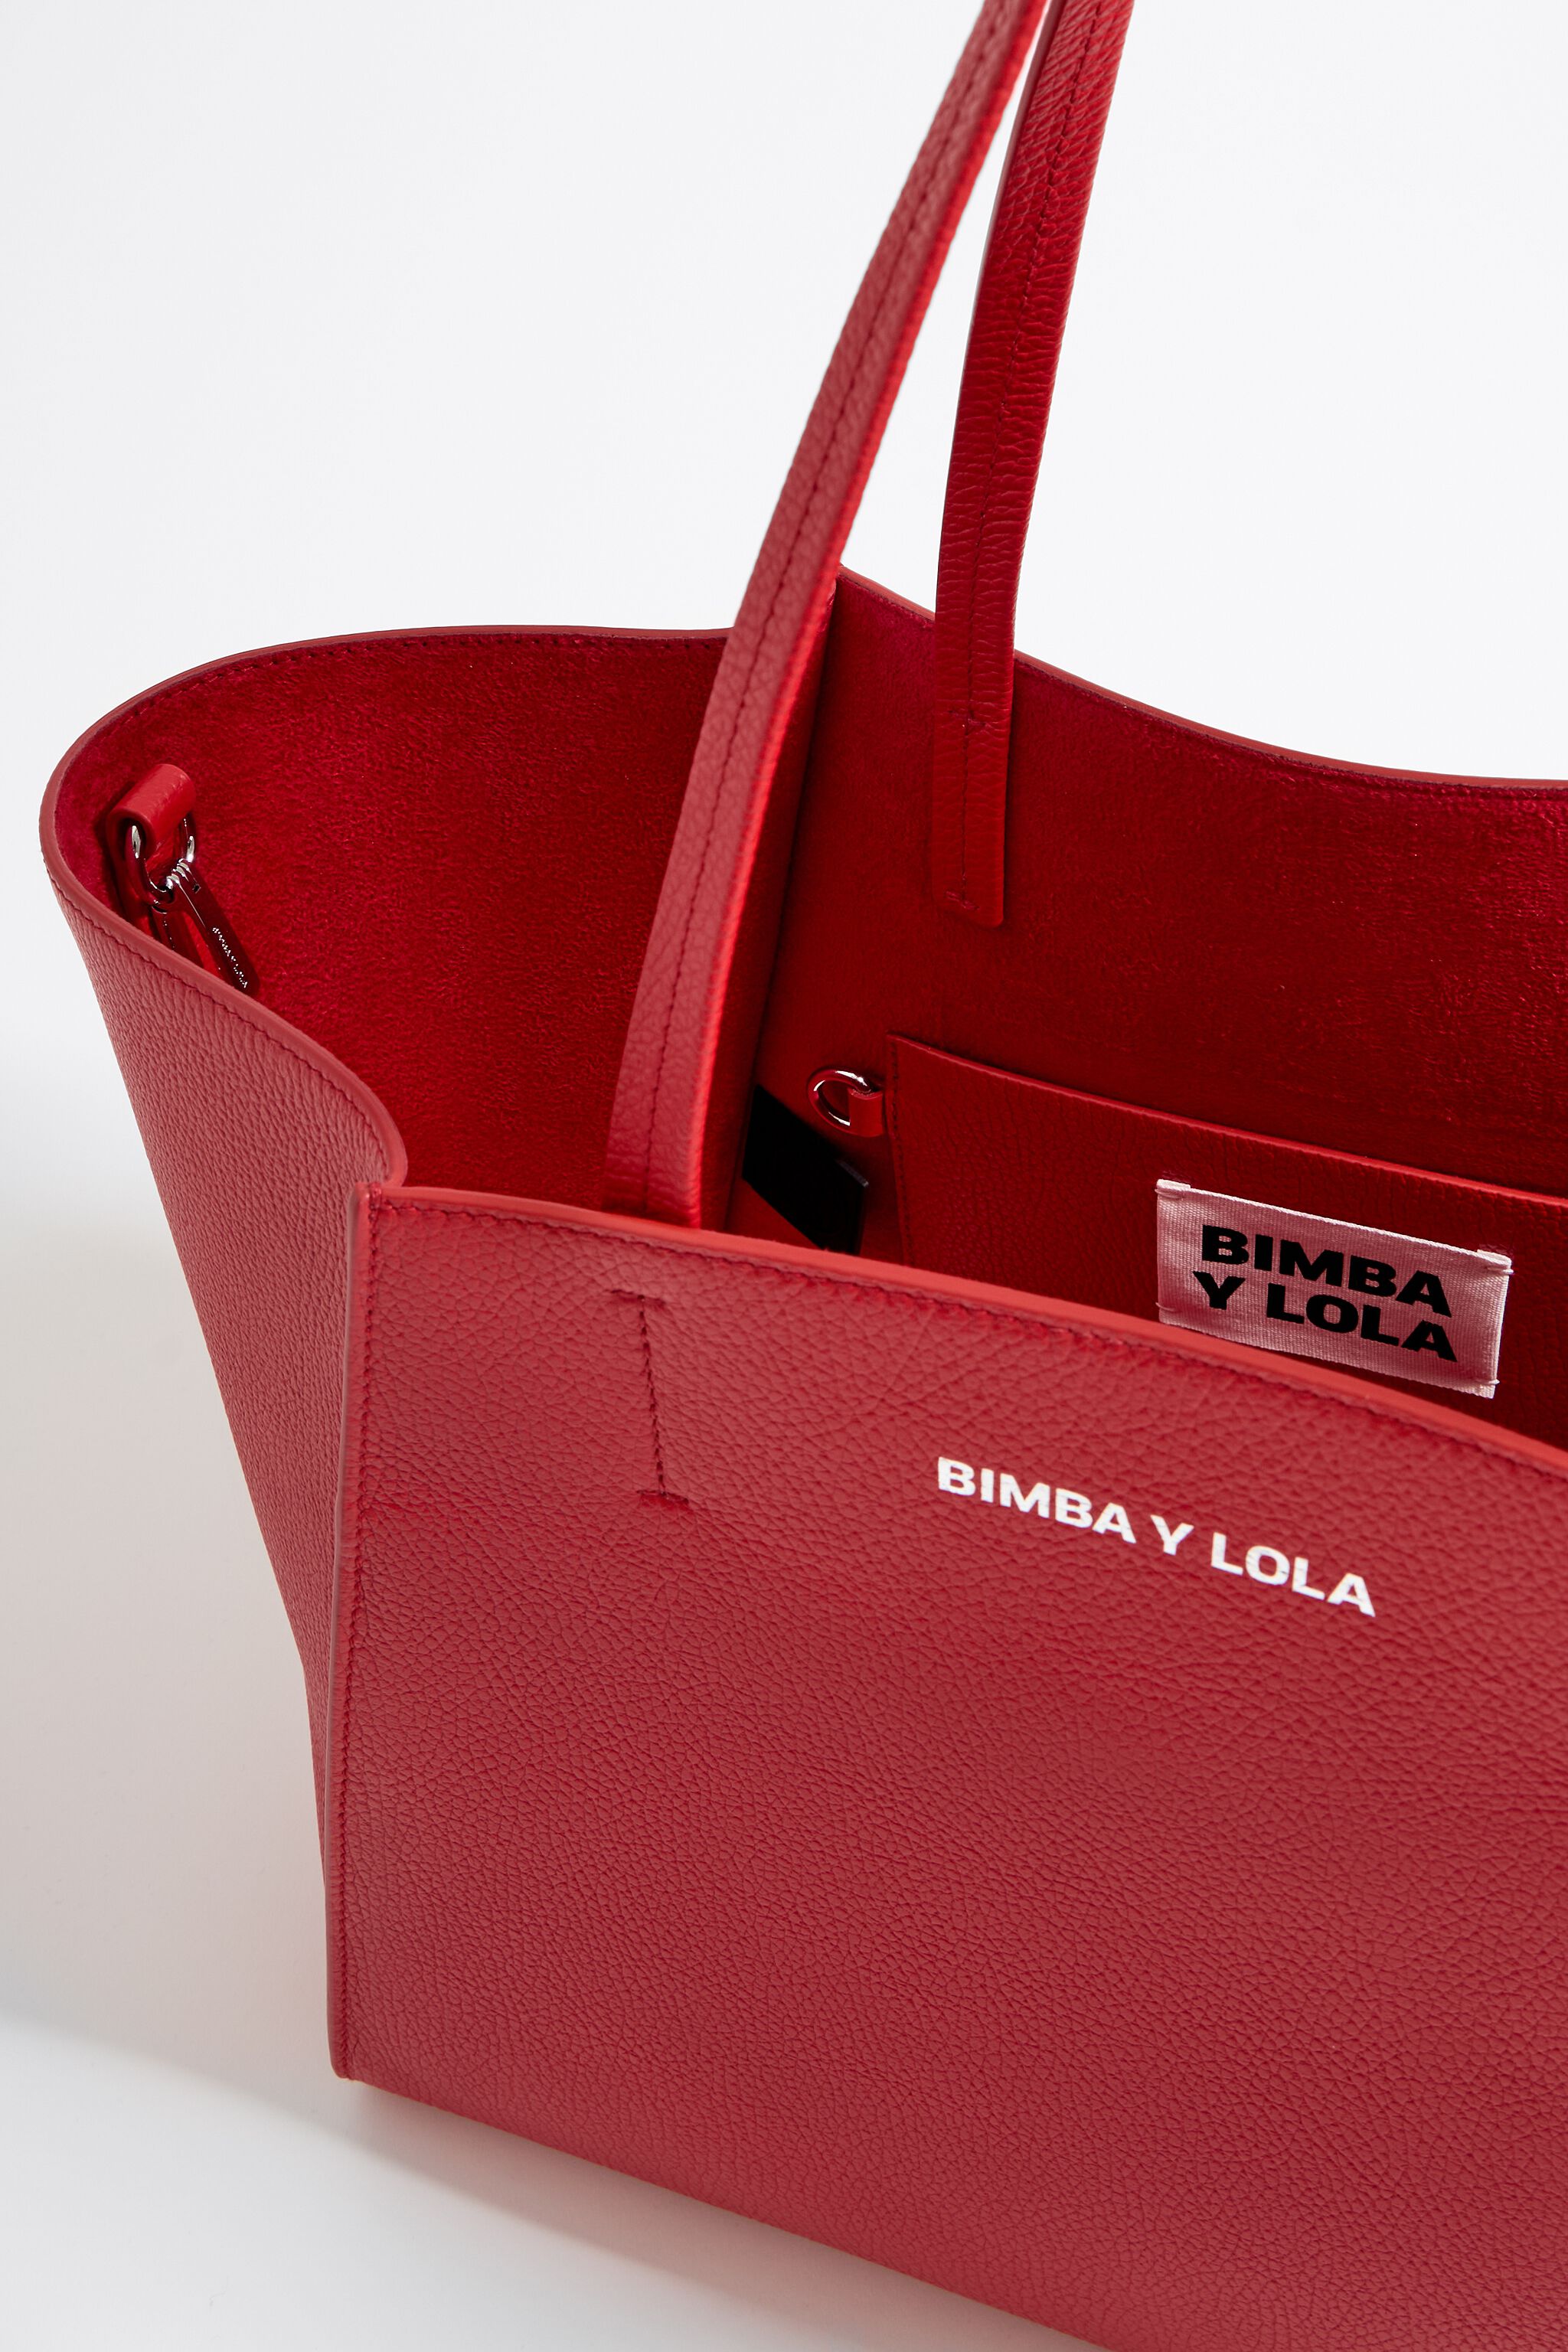 Latest Bimba y Lola Bags & Handbags arrivals - Women - 55 products |  FASHIOLA INDIA